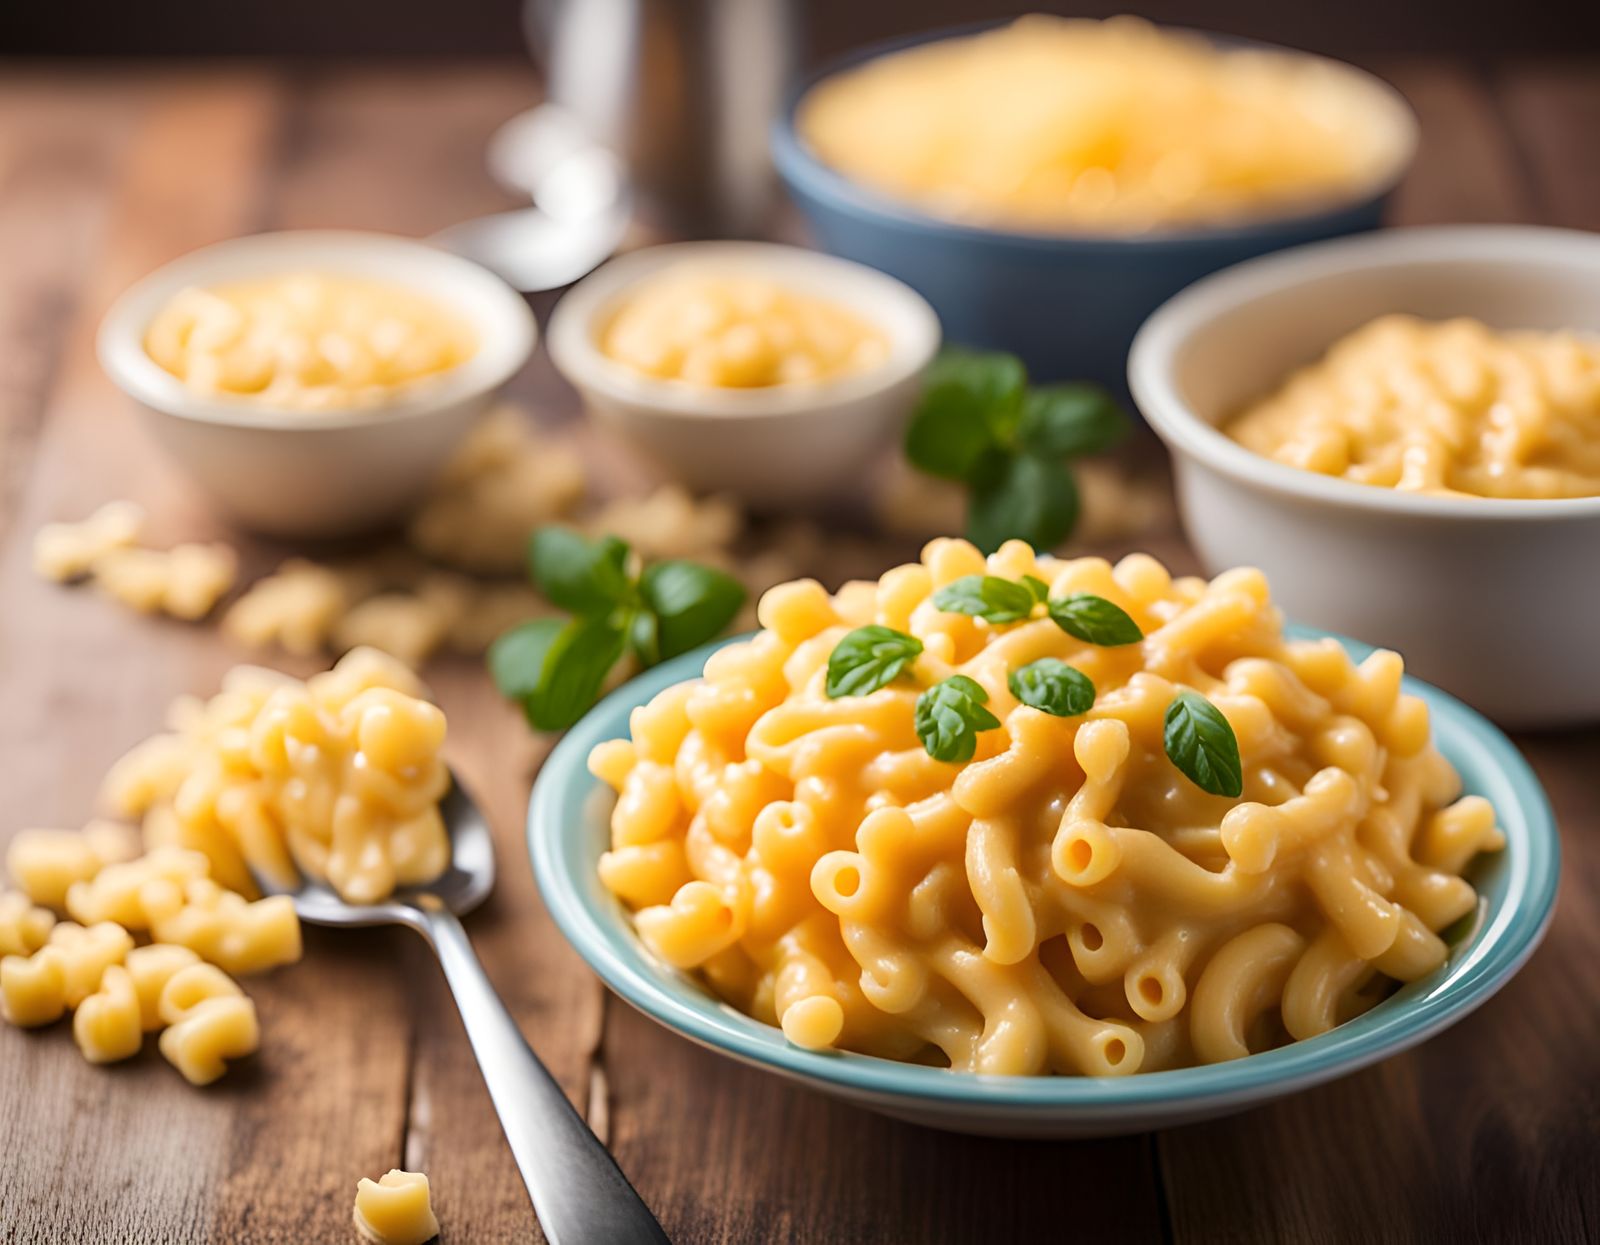 Bowl of Macaroni and Cheese